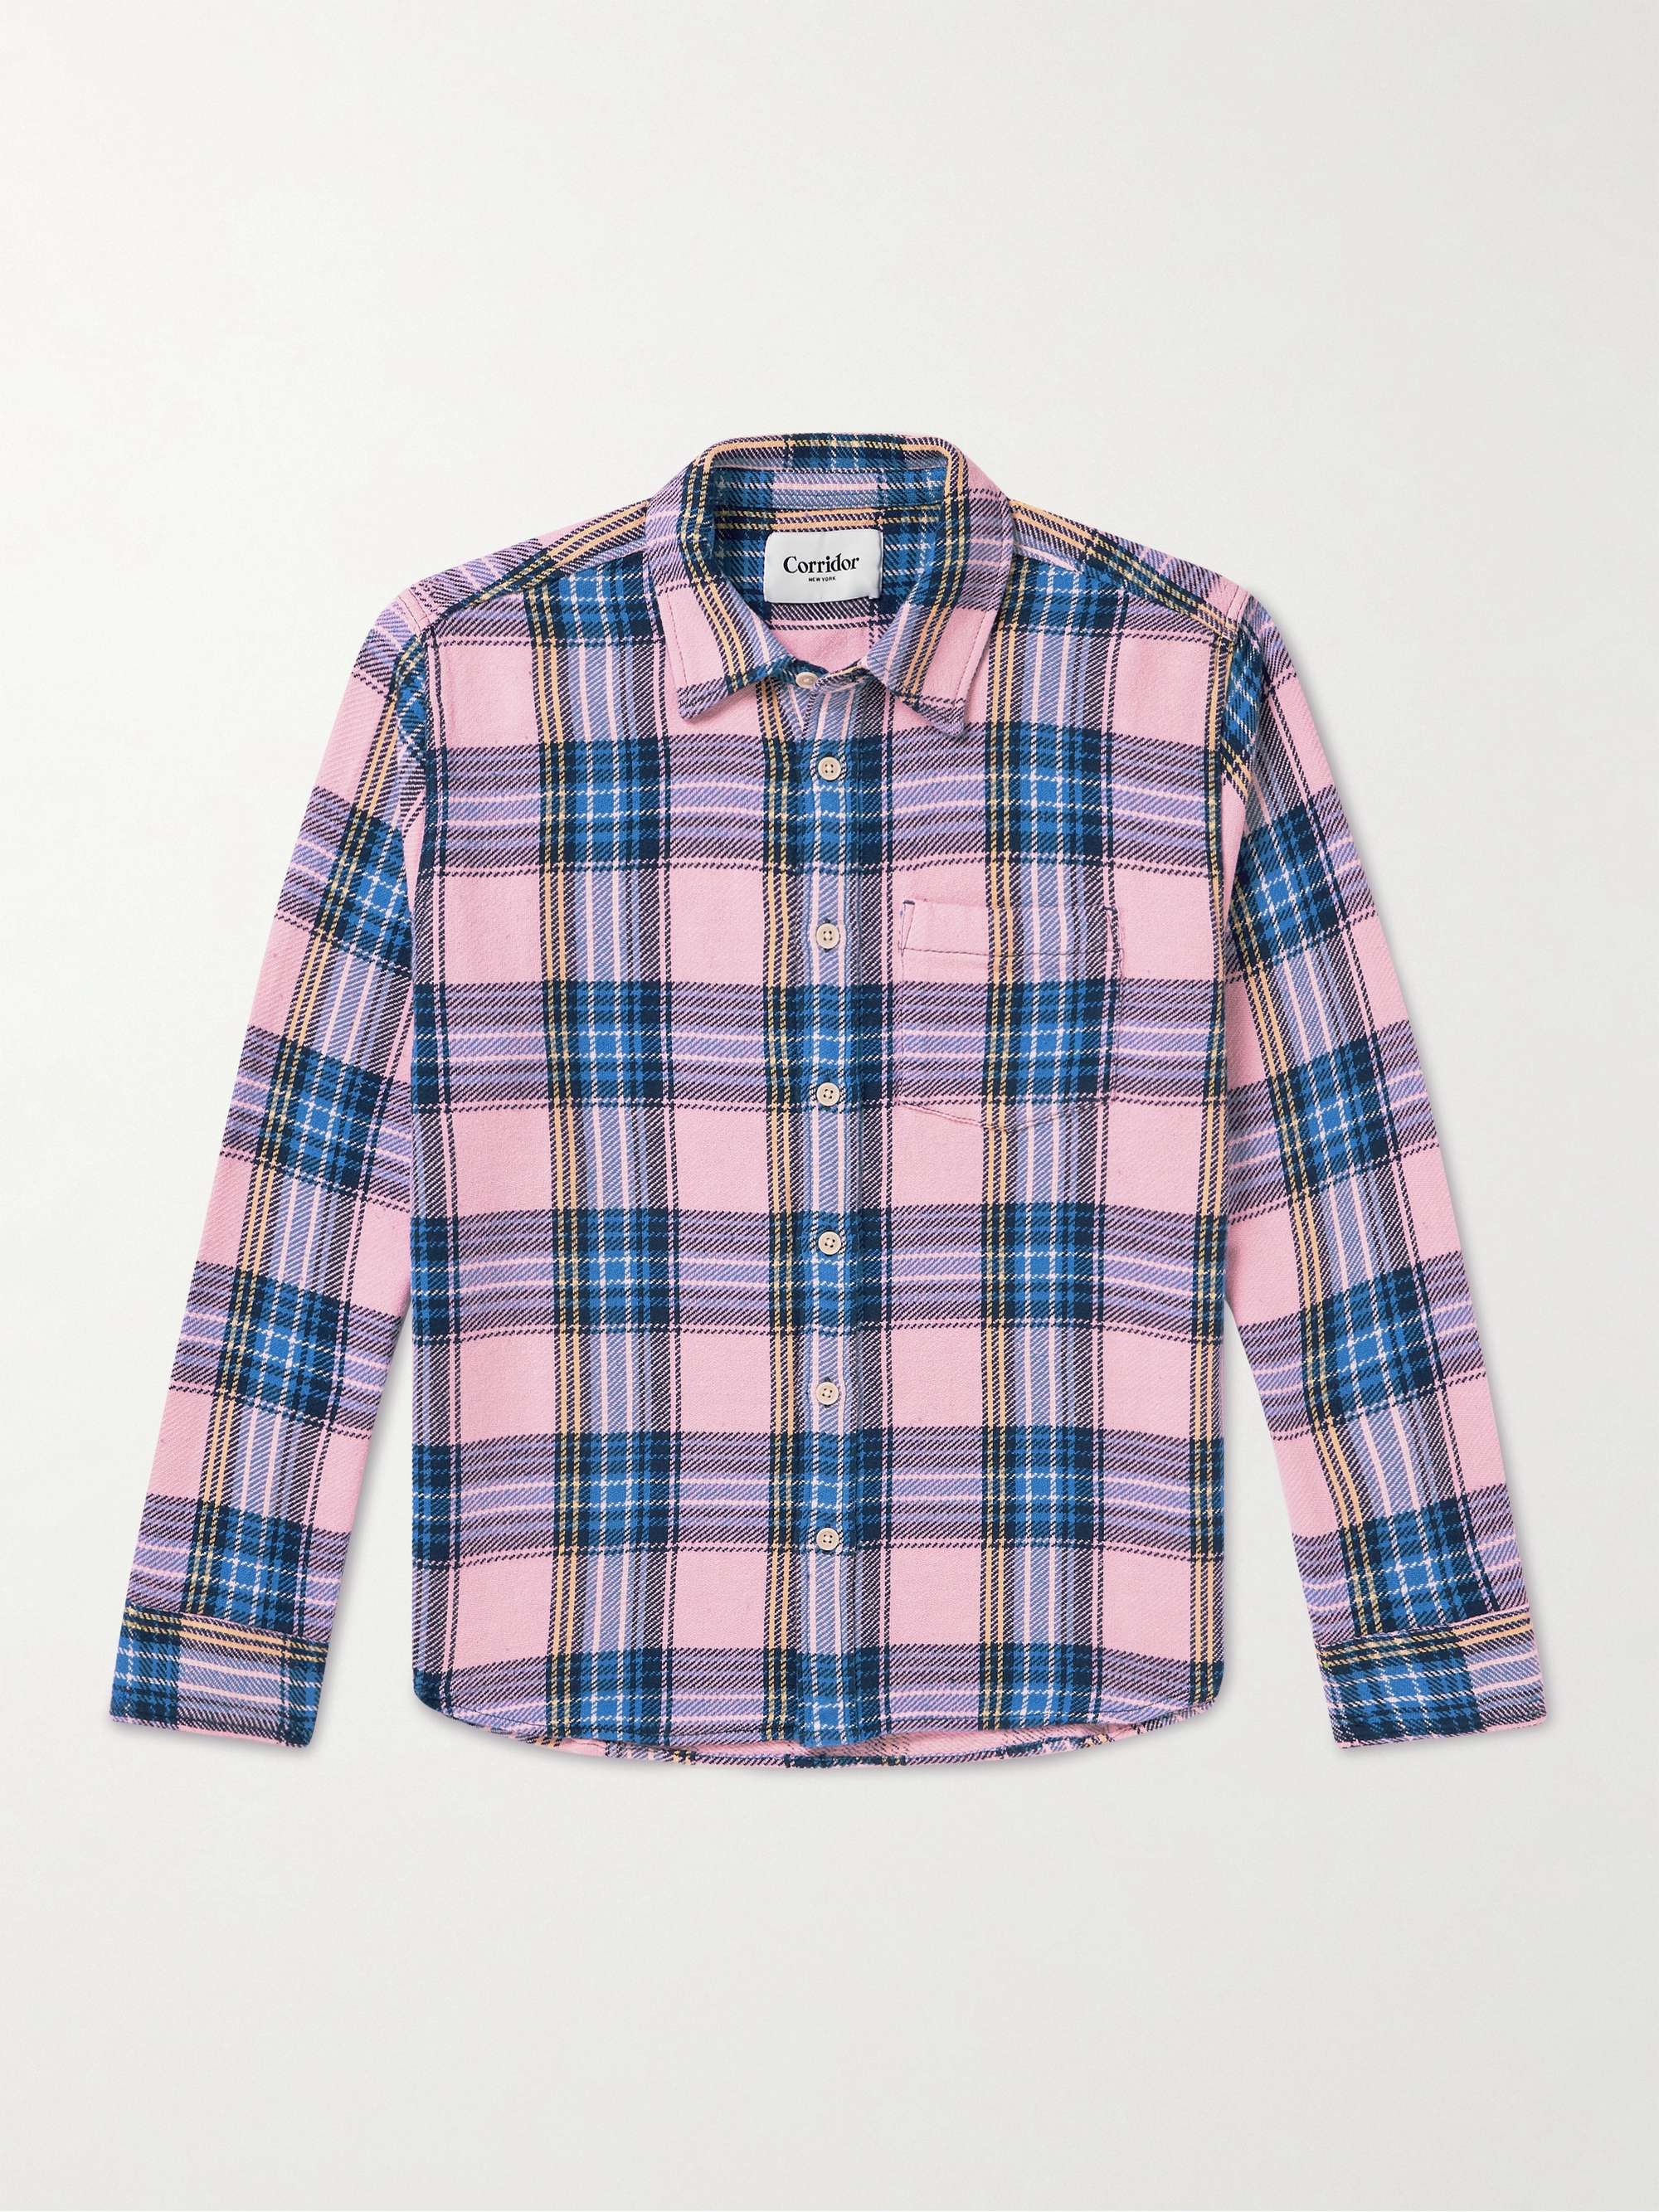 CORRIDOR Checked Cotton-Flannel Shirt for Men | MR PORTER